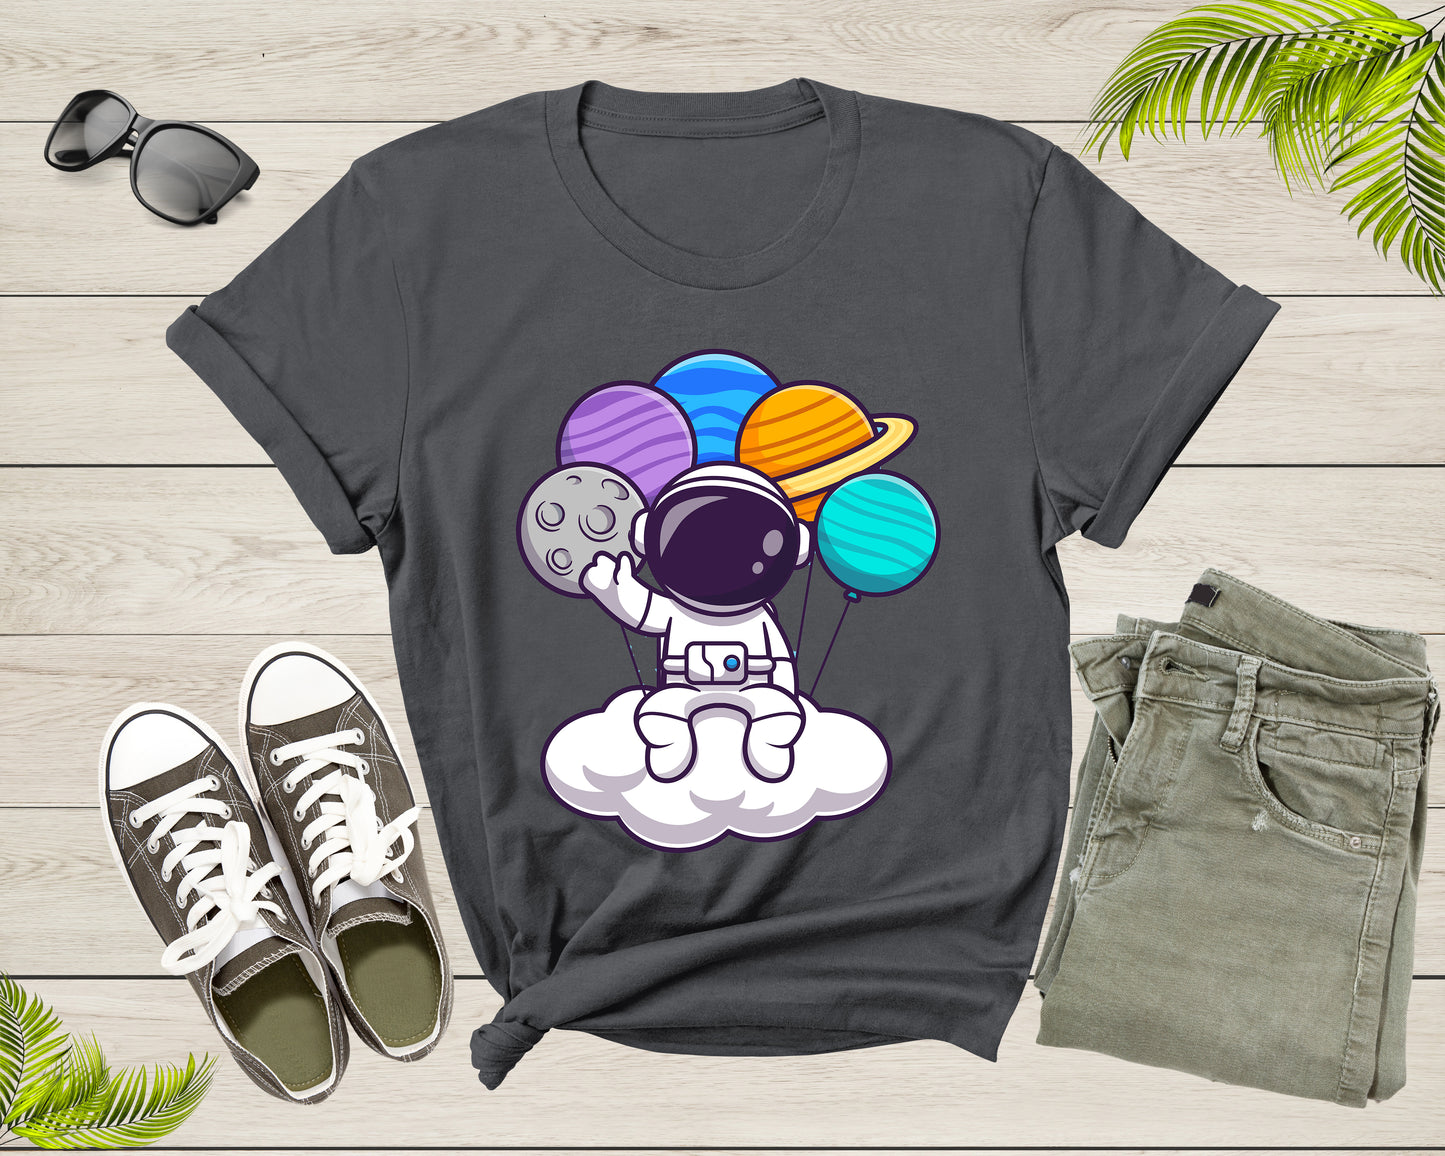 Astronaut Space Lovers Gift Astronaut Spaceman Graphic Design Adult Men Women Kids Boys Girls Shirt Astronaut Birthday Present T-shirt